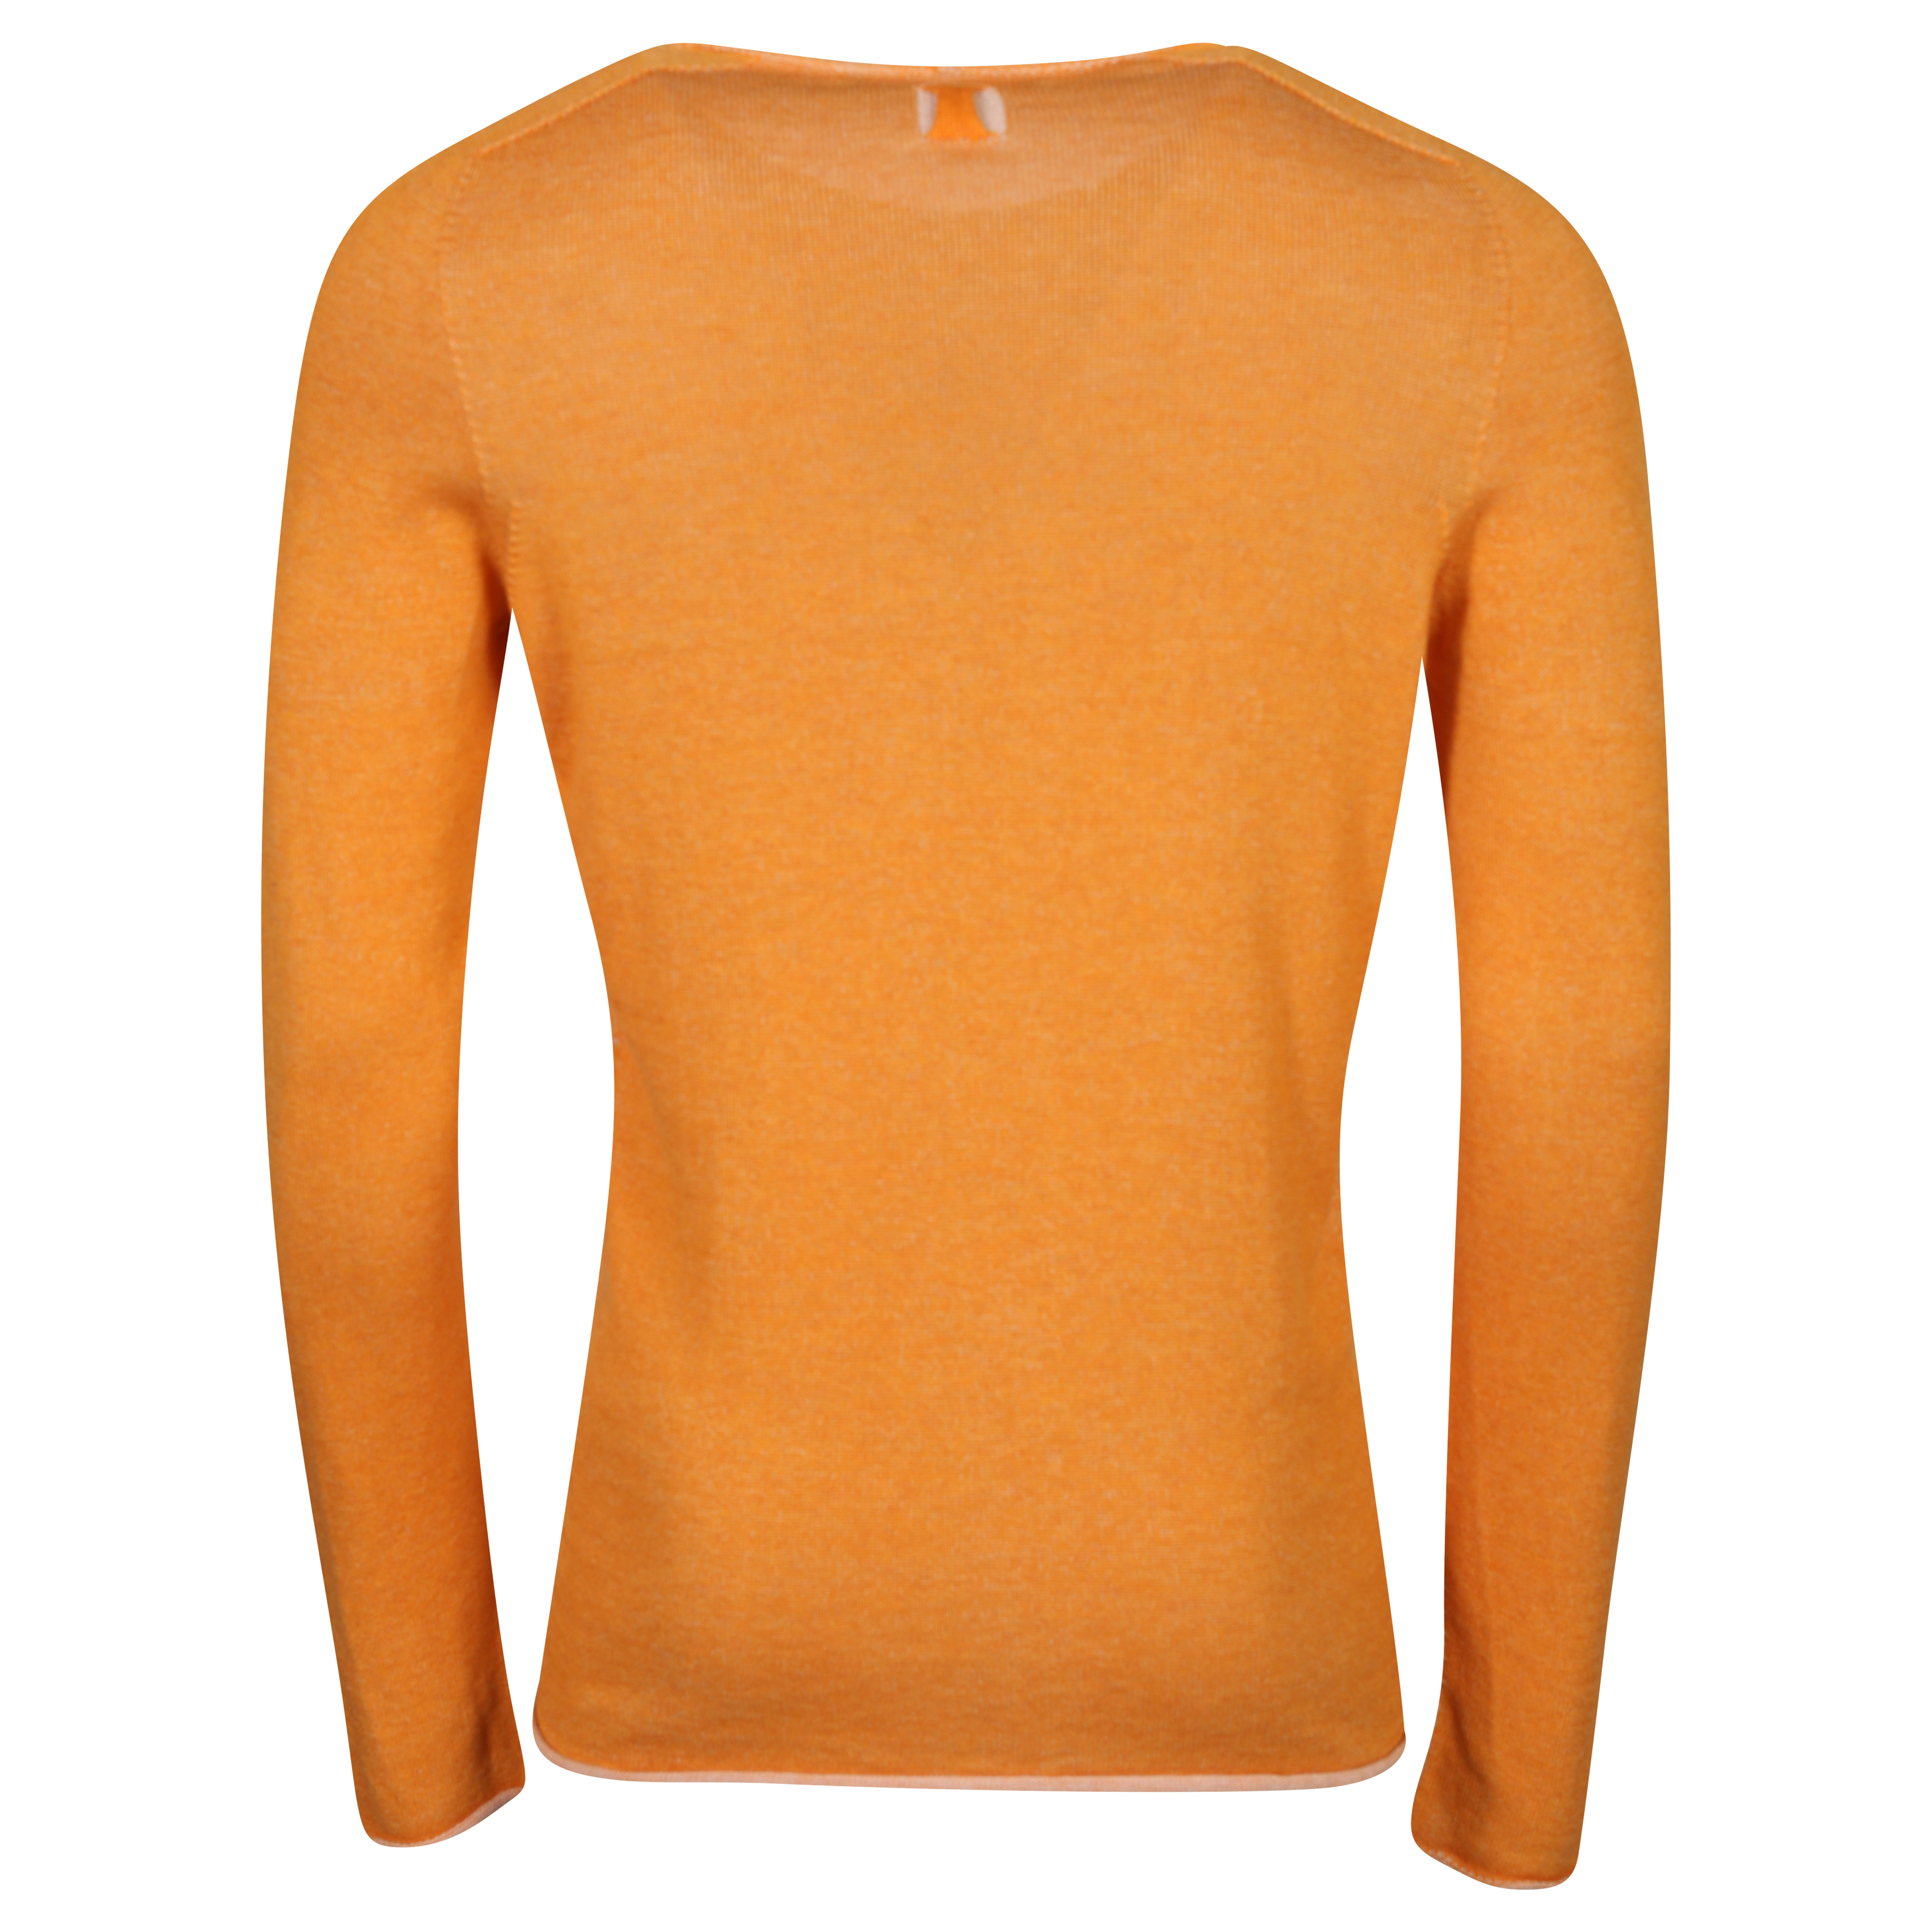 Hannes Roether Cotton/Cashmere Sweater in Orange Melange